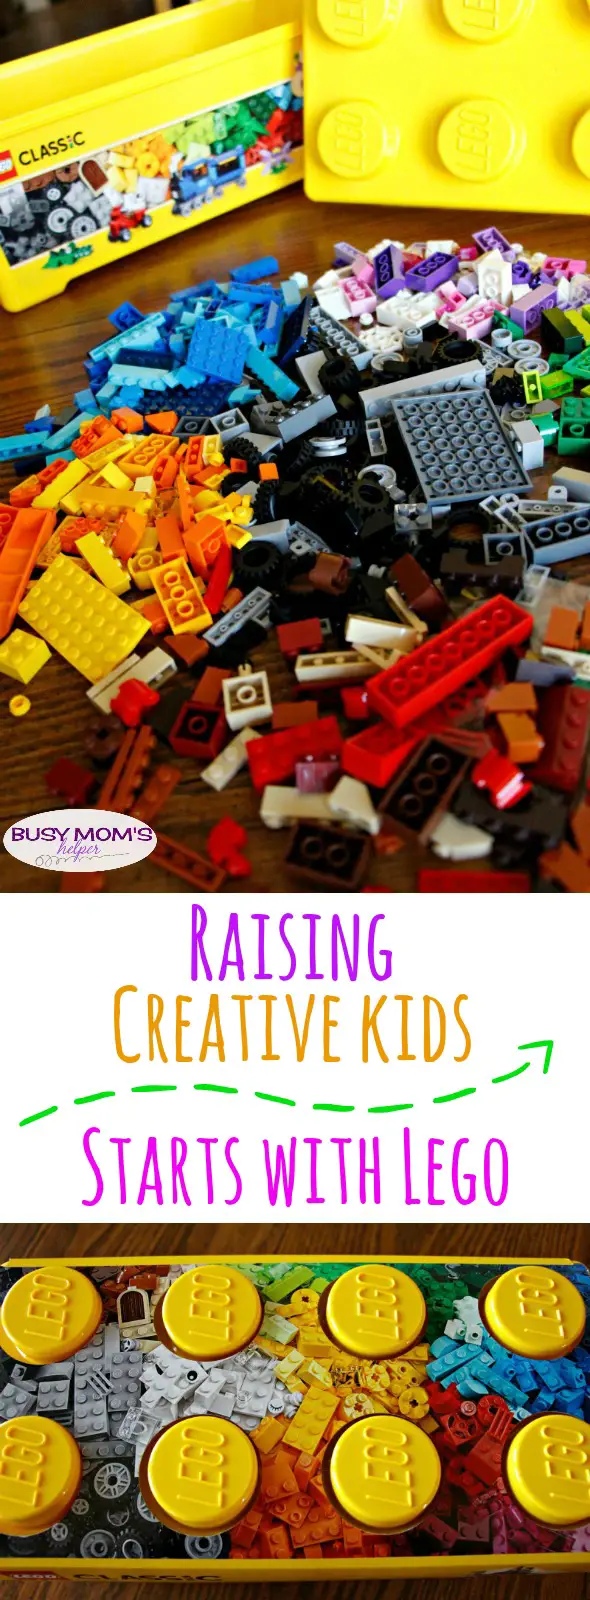 Raising Creative Kids Starts with LEGO / by BusyMomsHelper.com #KeepBuilding #sponsored